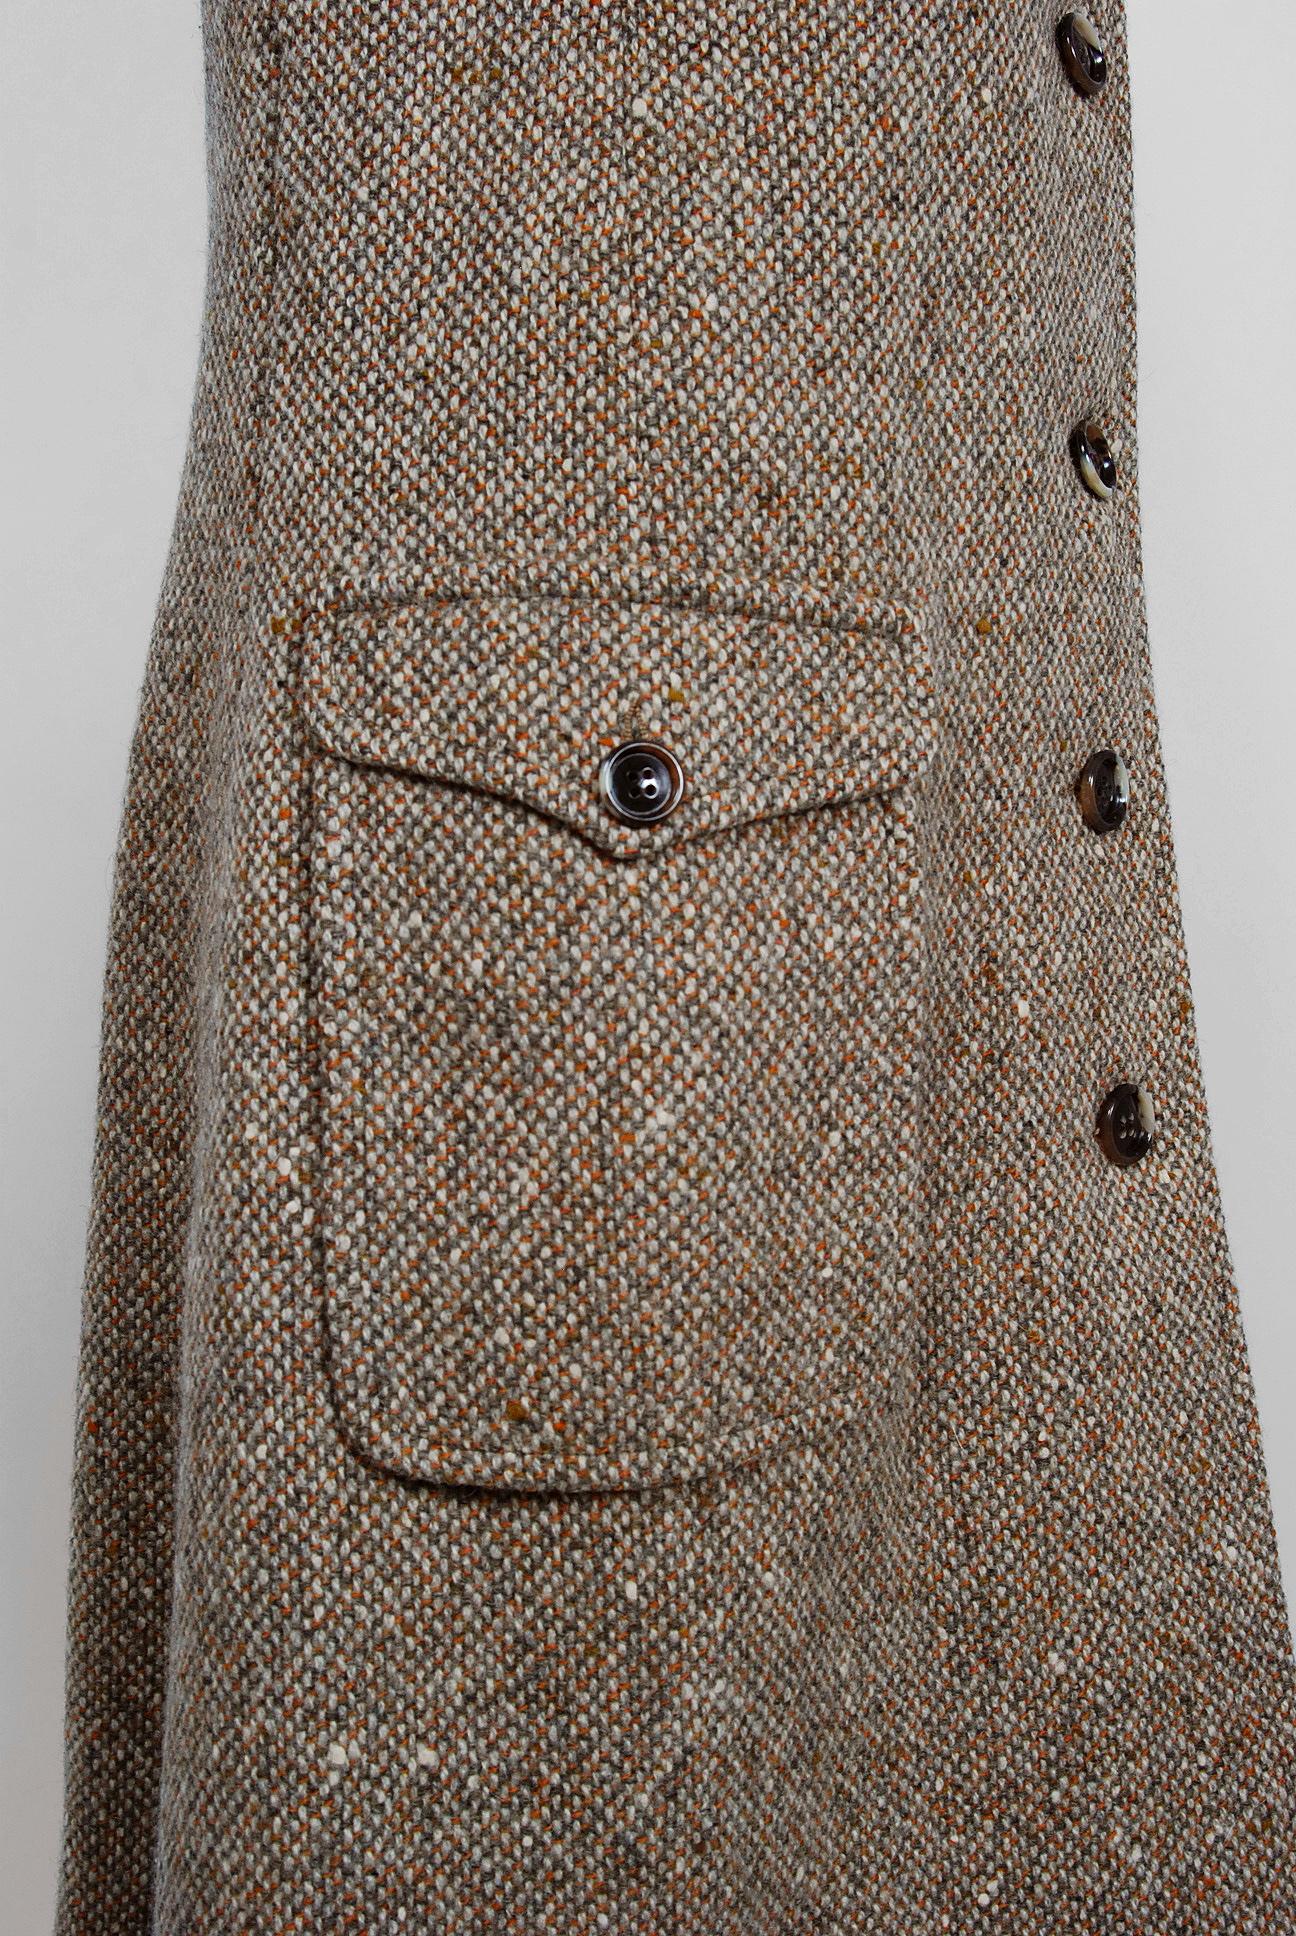 1973 Yves Saint Laurent Rive Gauche Autumn Brown Tweed Wide-Pocket Tailored Coat 1